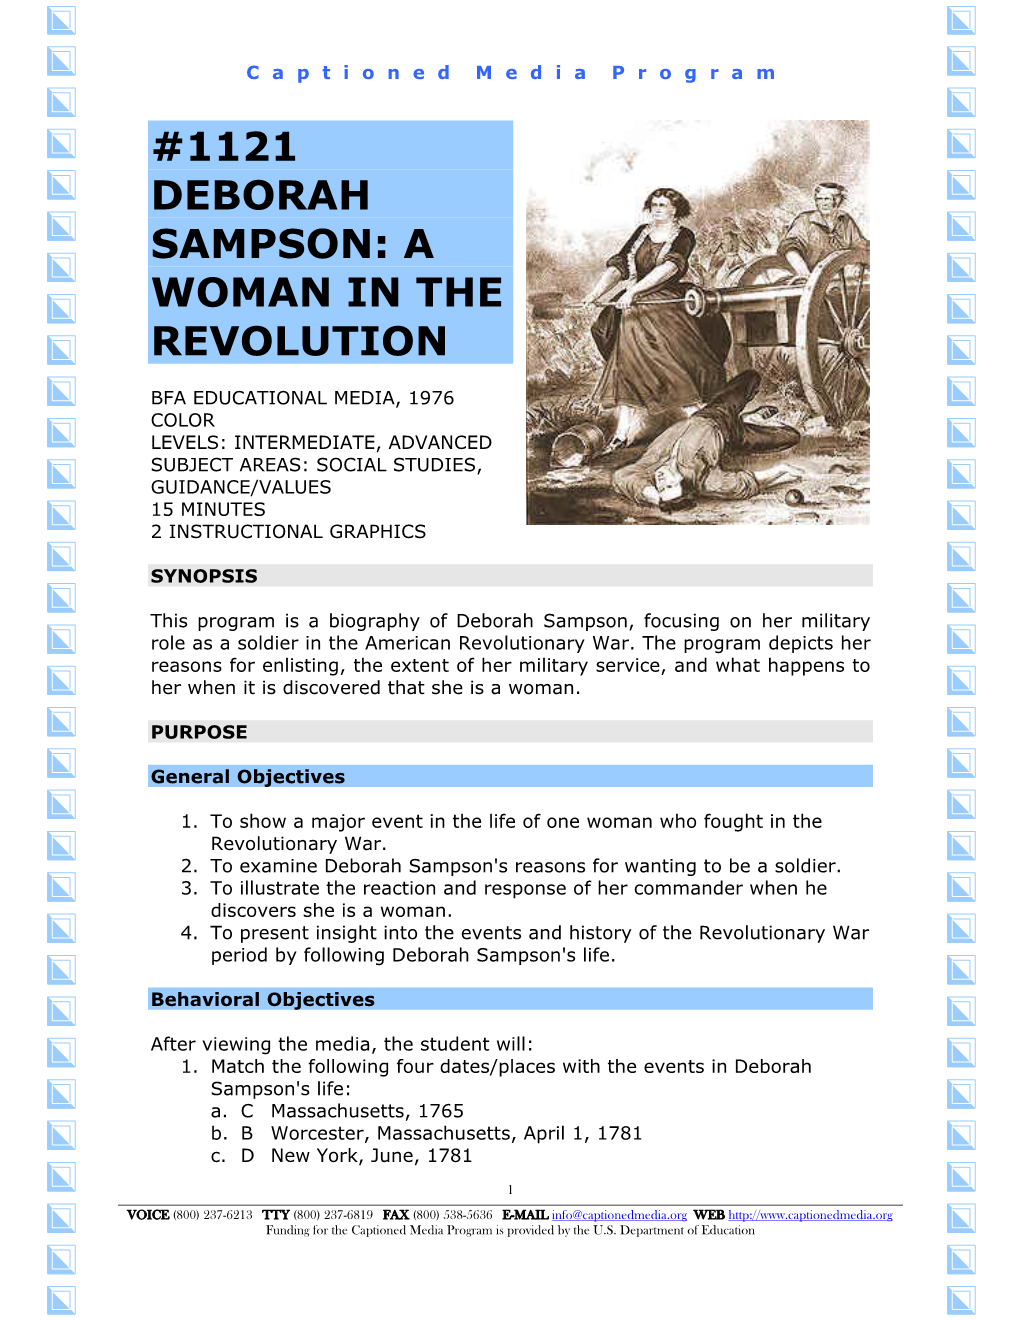 Deborah Sampson: a Woman in the Revolution